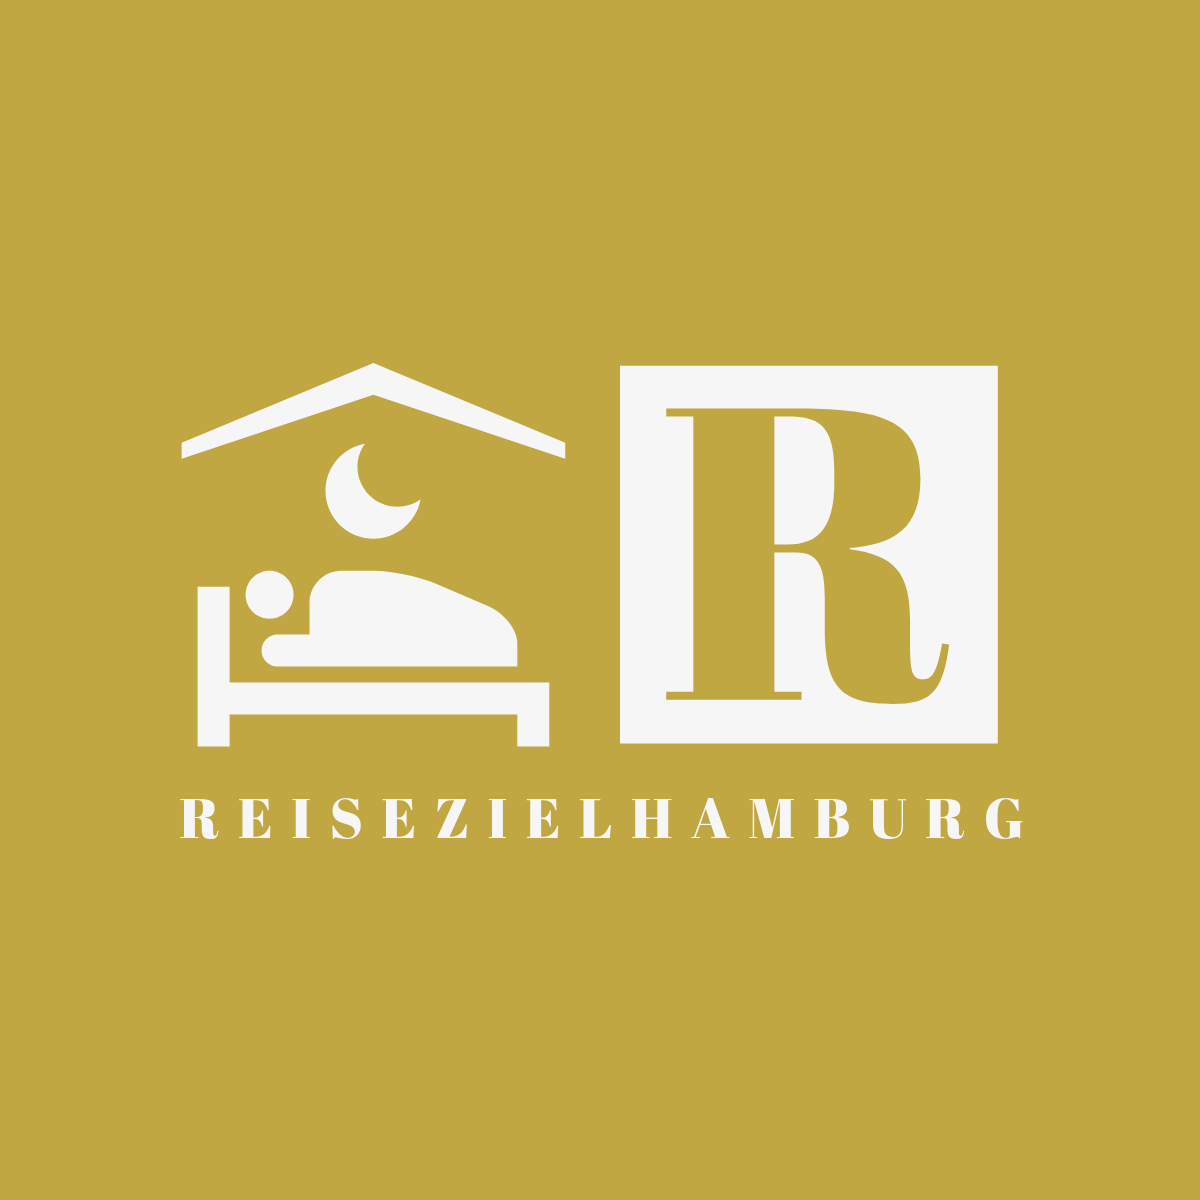 ReiseZiel Hamburg